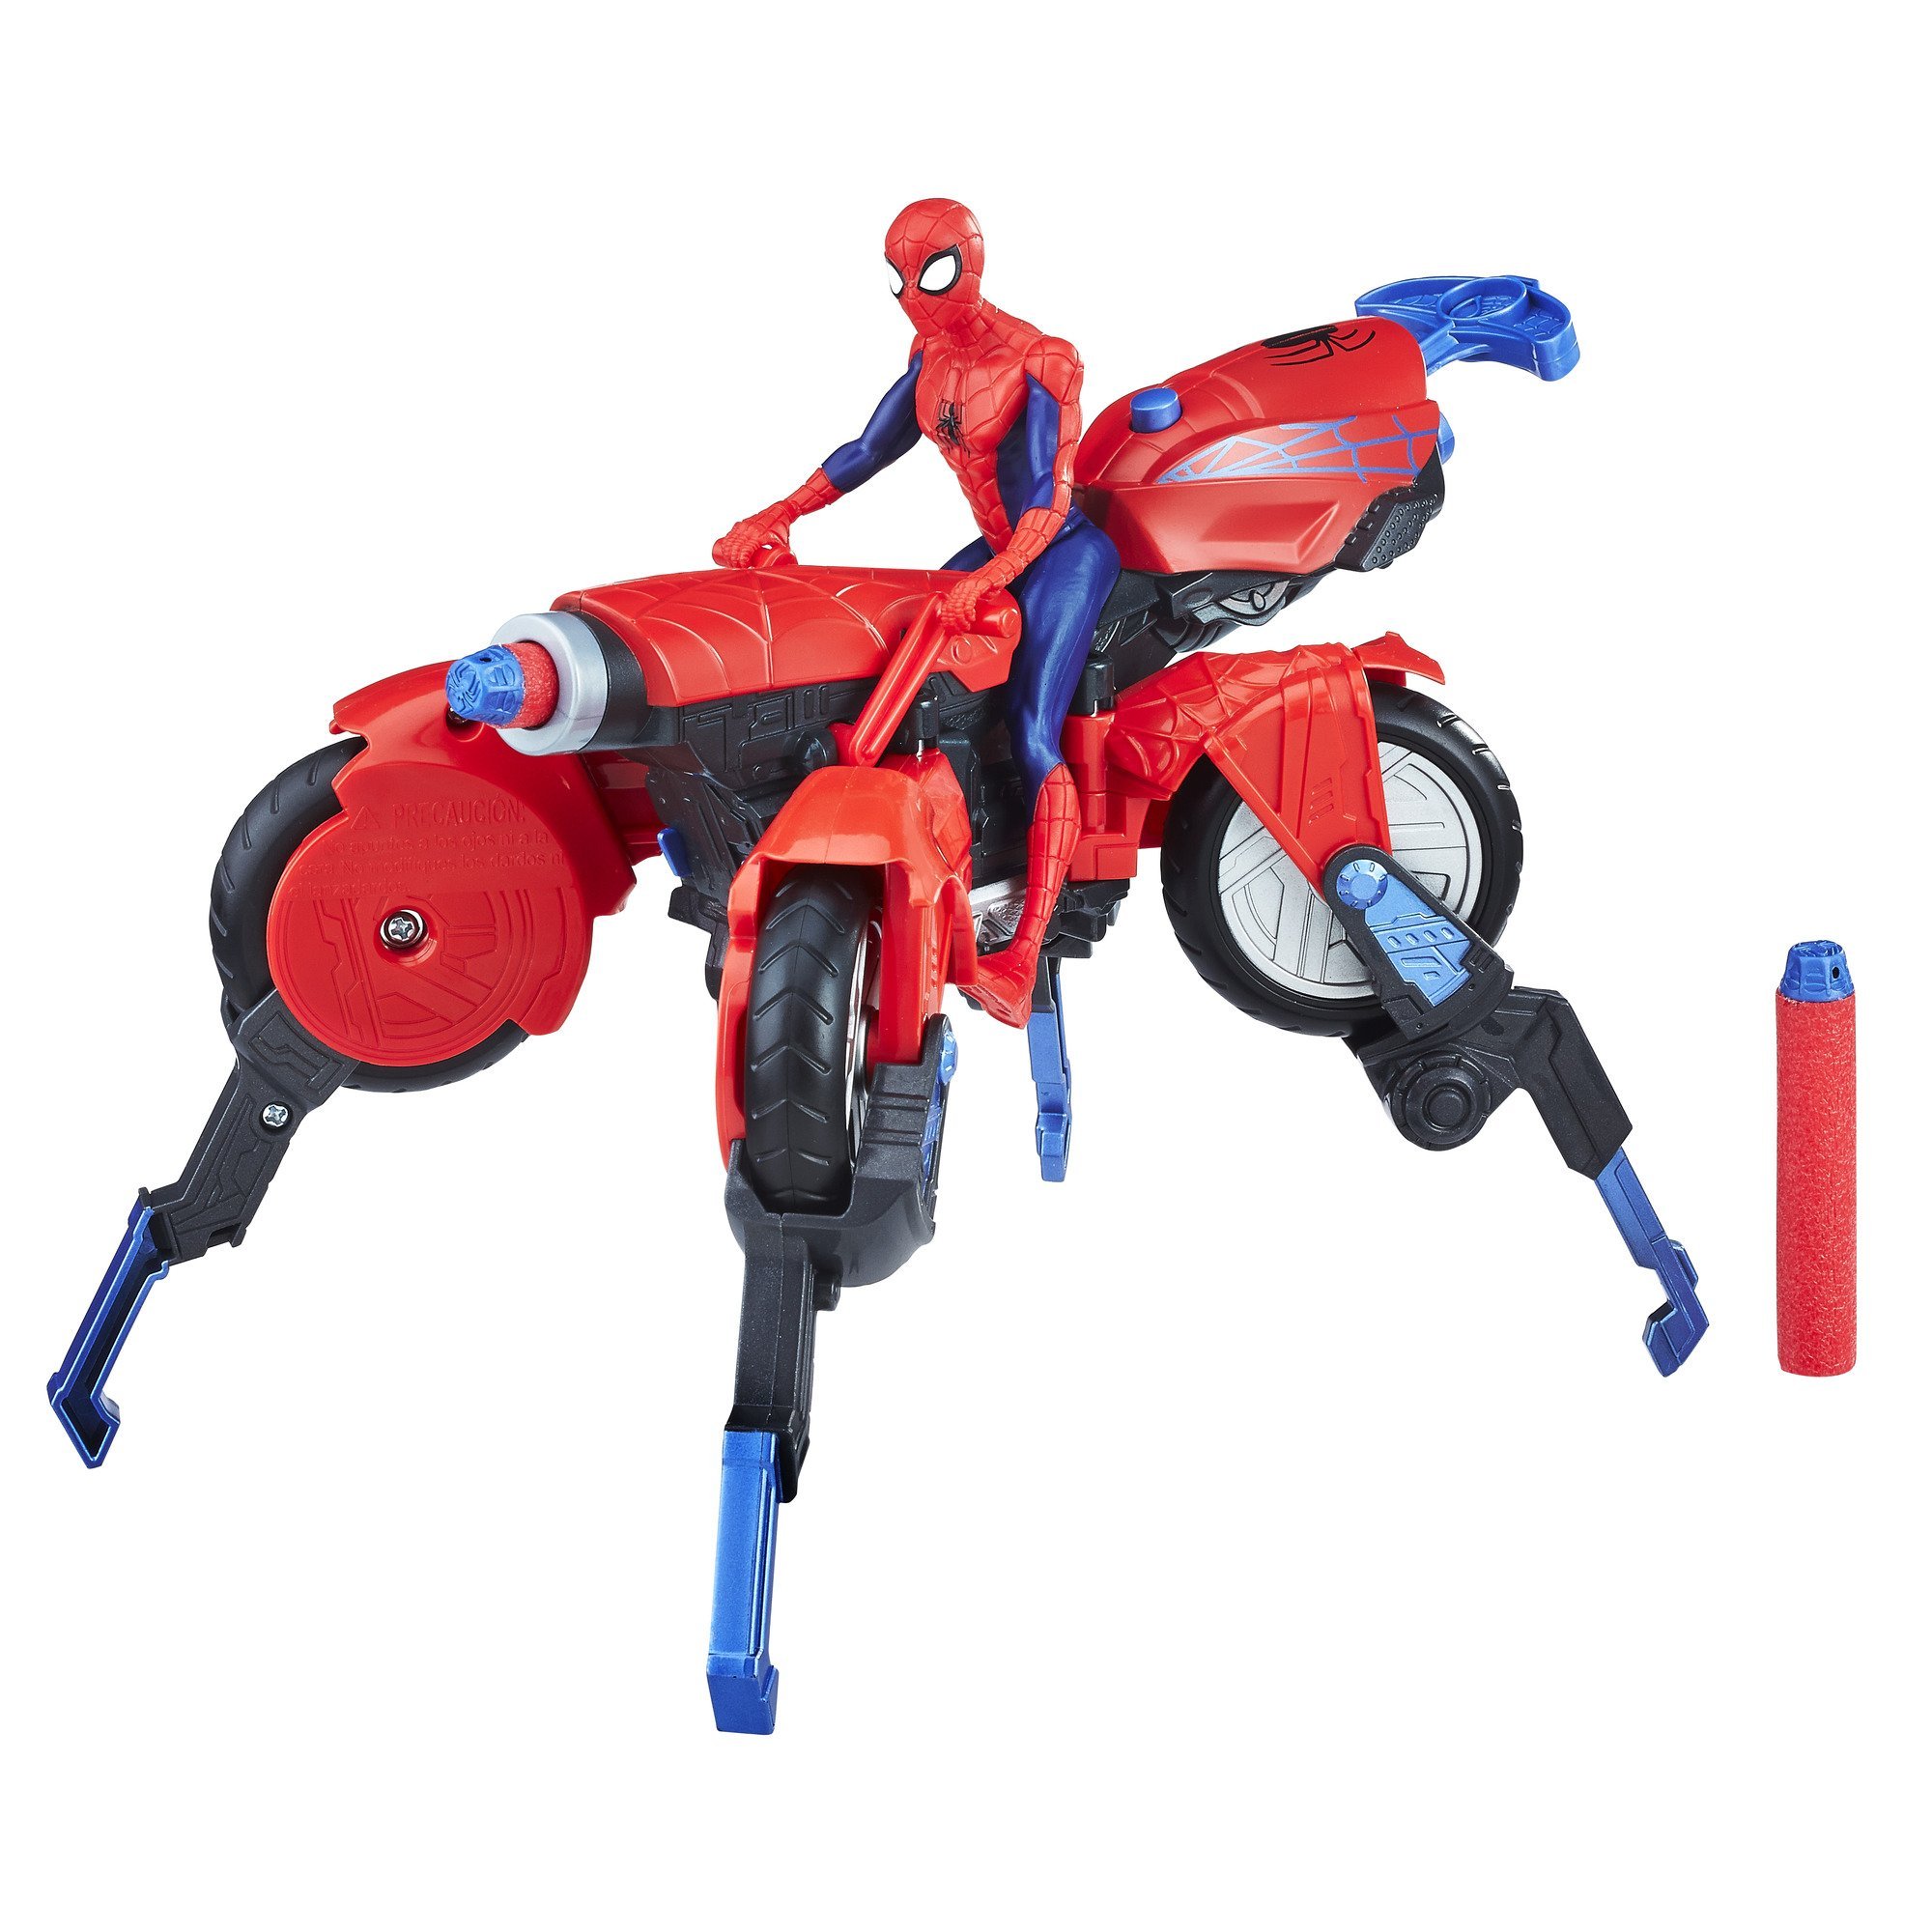 Marvel Aracno Moto Spider-Man Hasbro